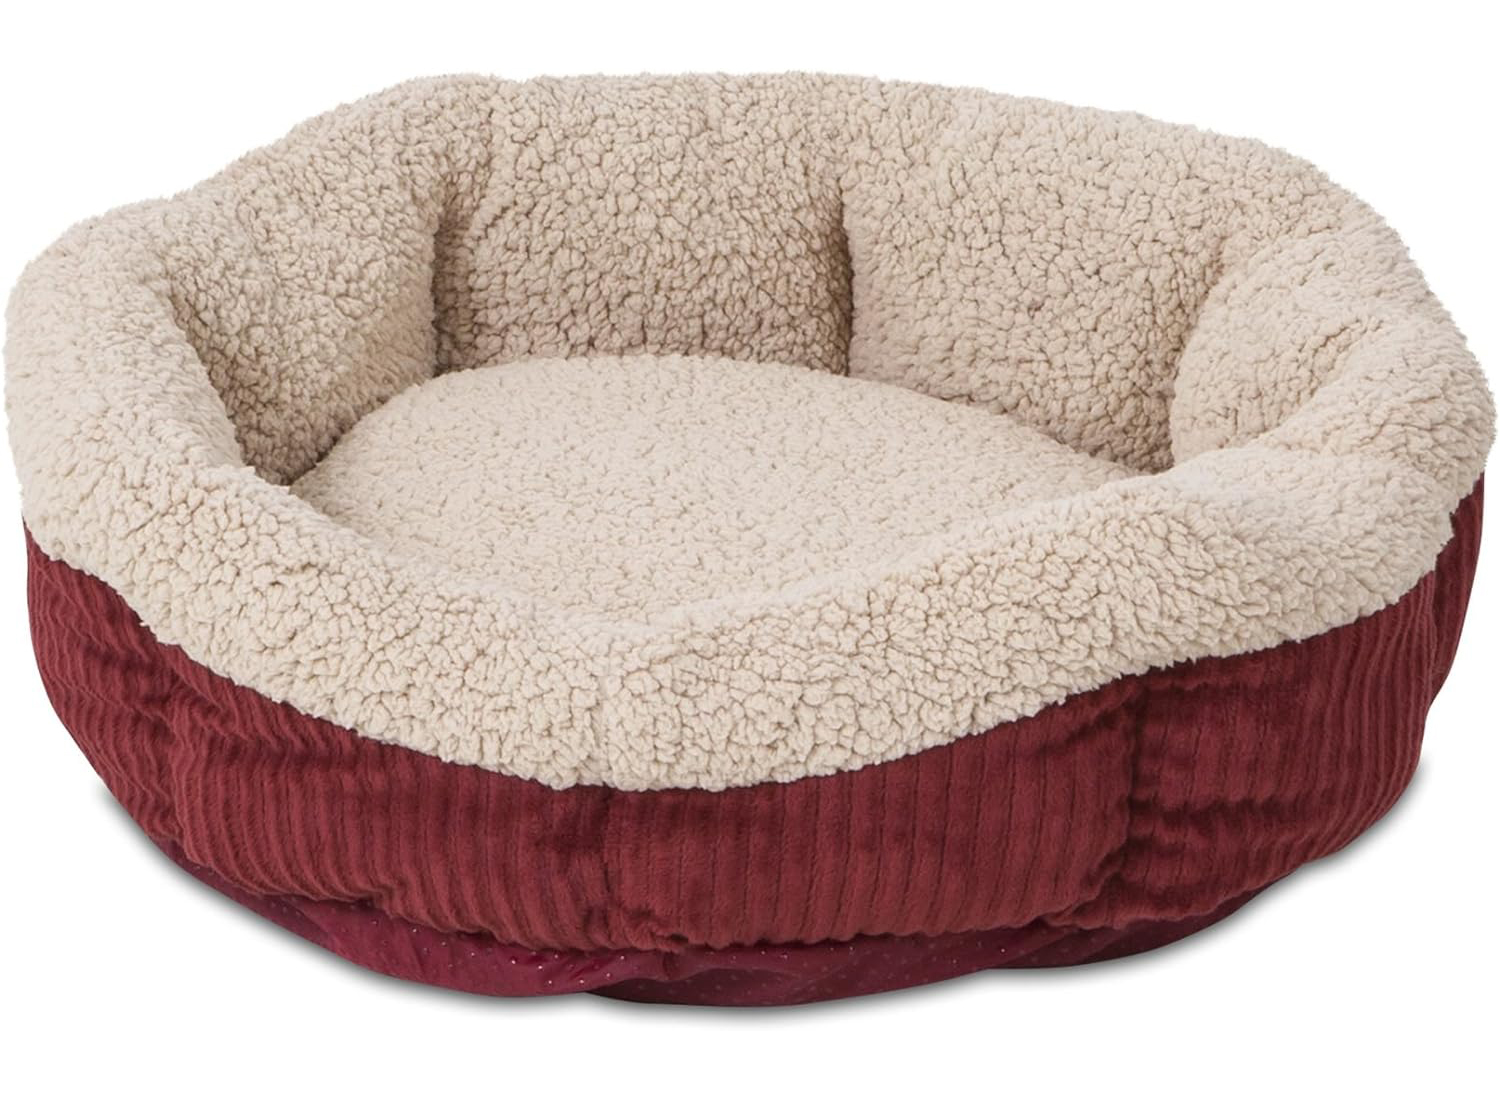 Petmate Aspen Pet Self Warming Round Bed